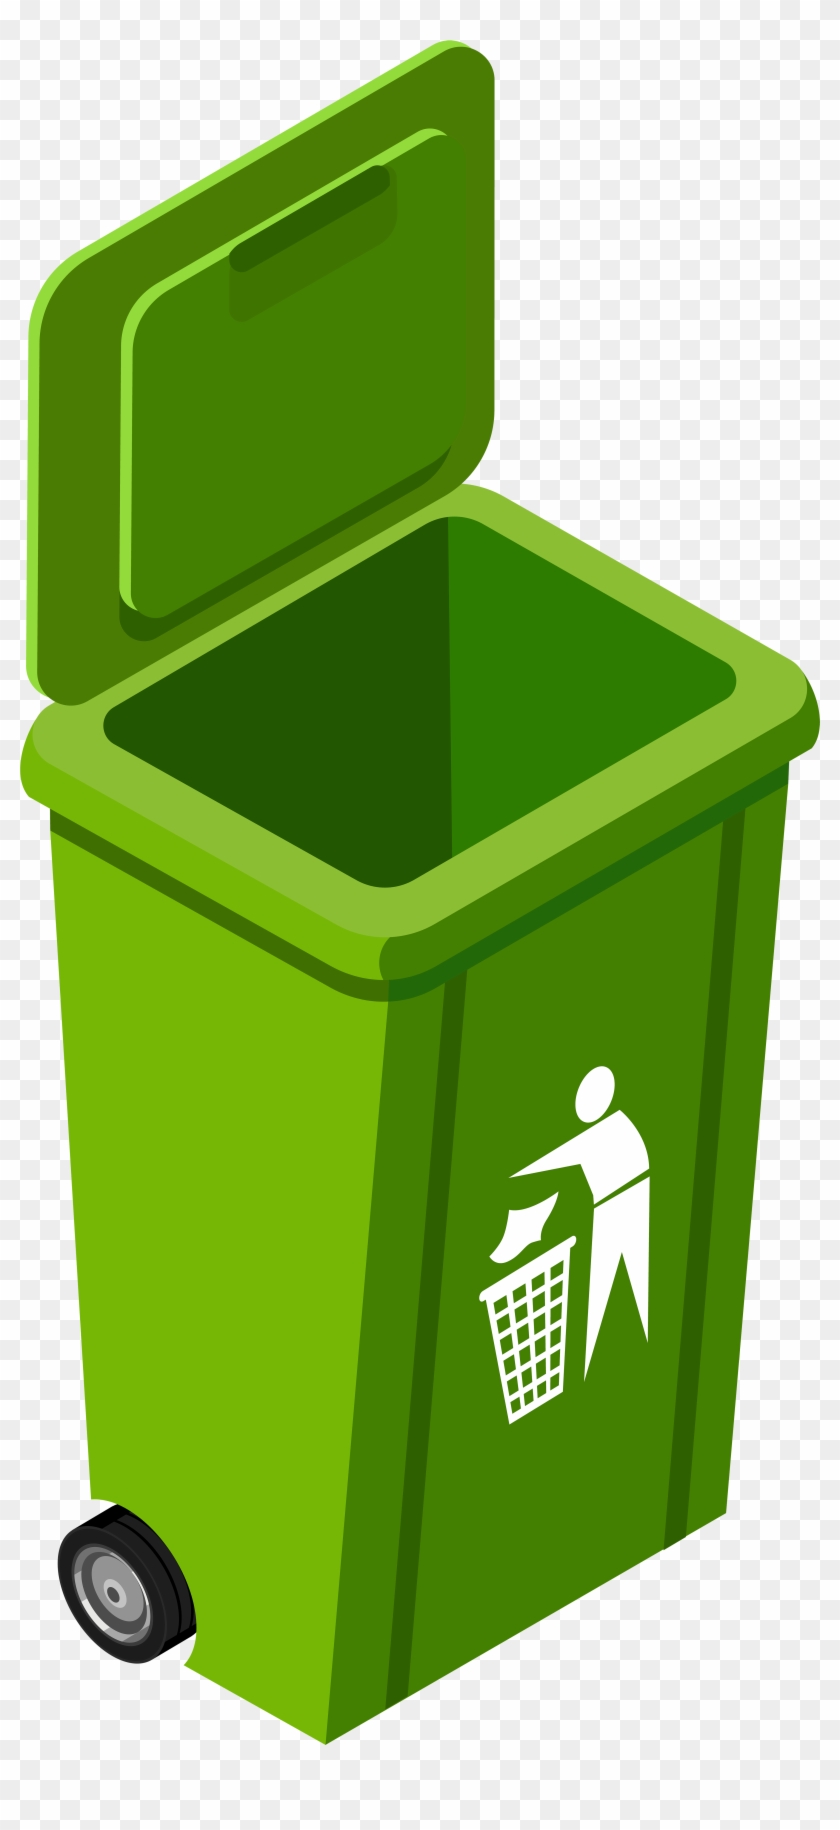 Green Trash Can Png Clip Art Image - Trash Can Clip Art #70901